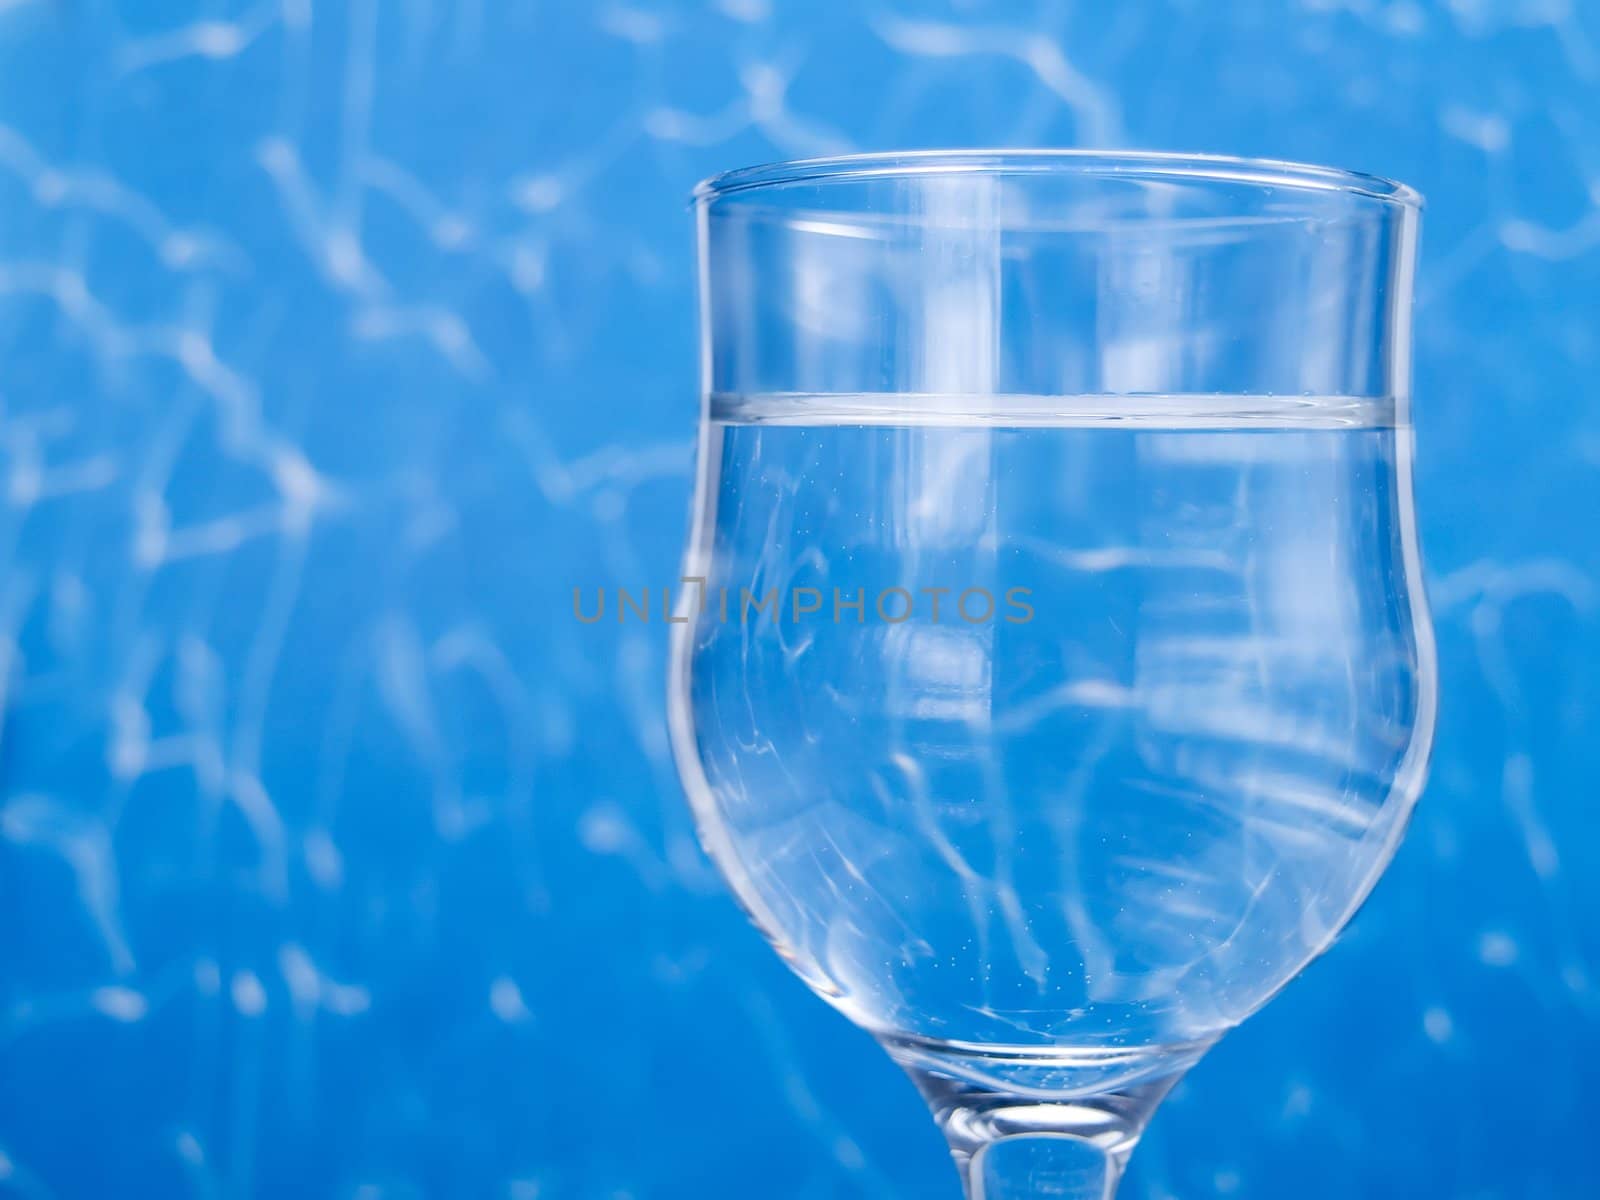 Glass of water by henrischmit